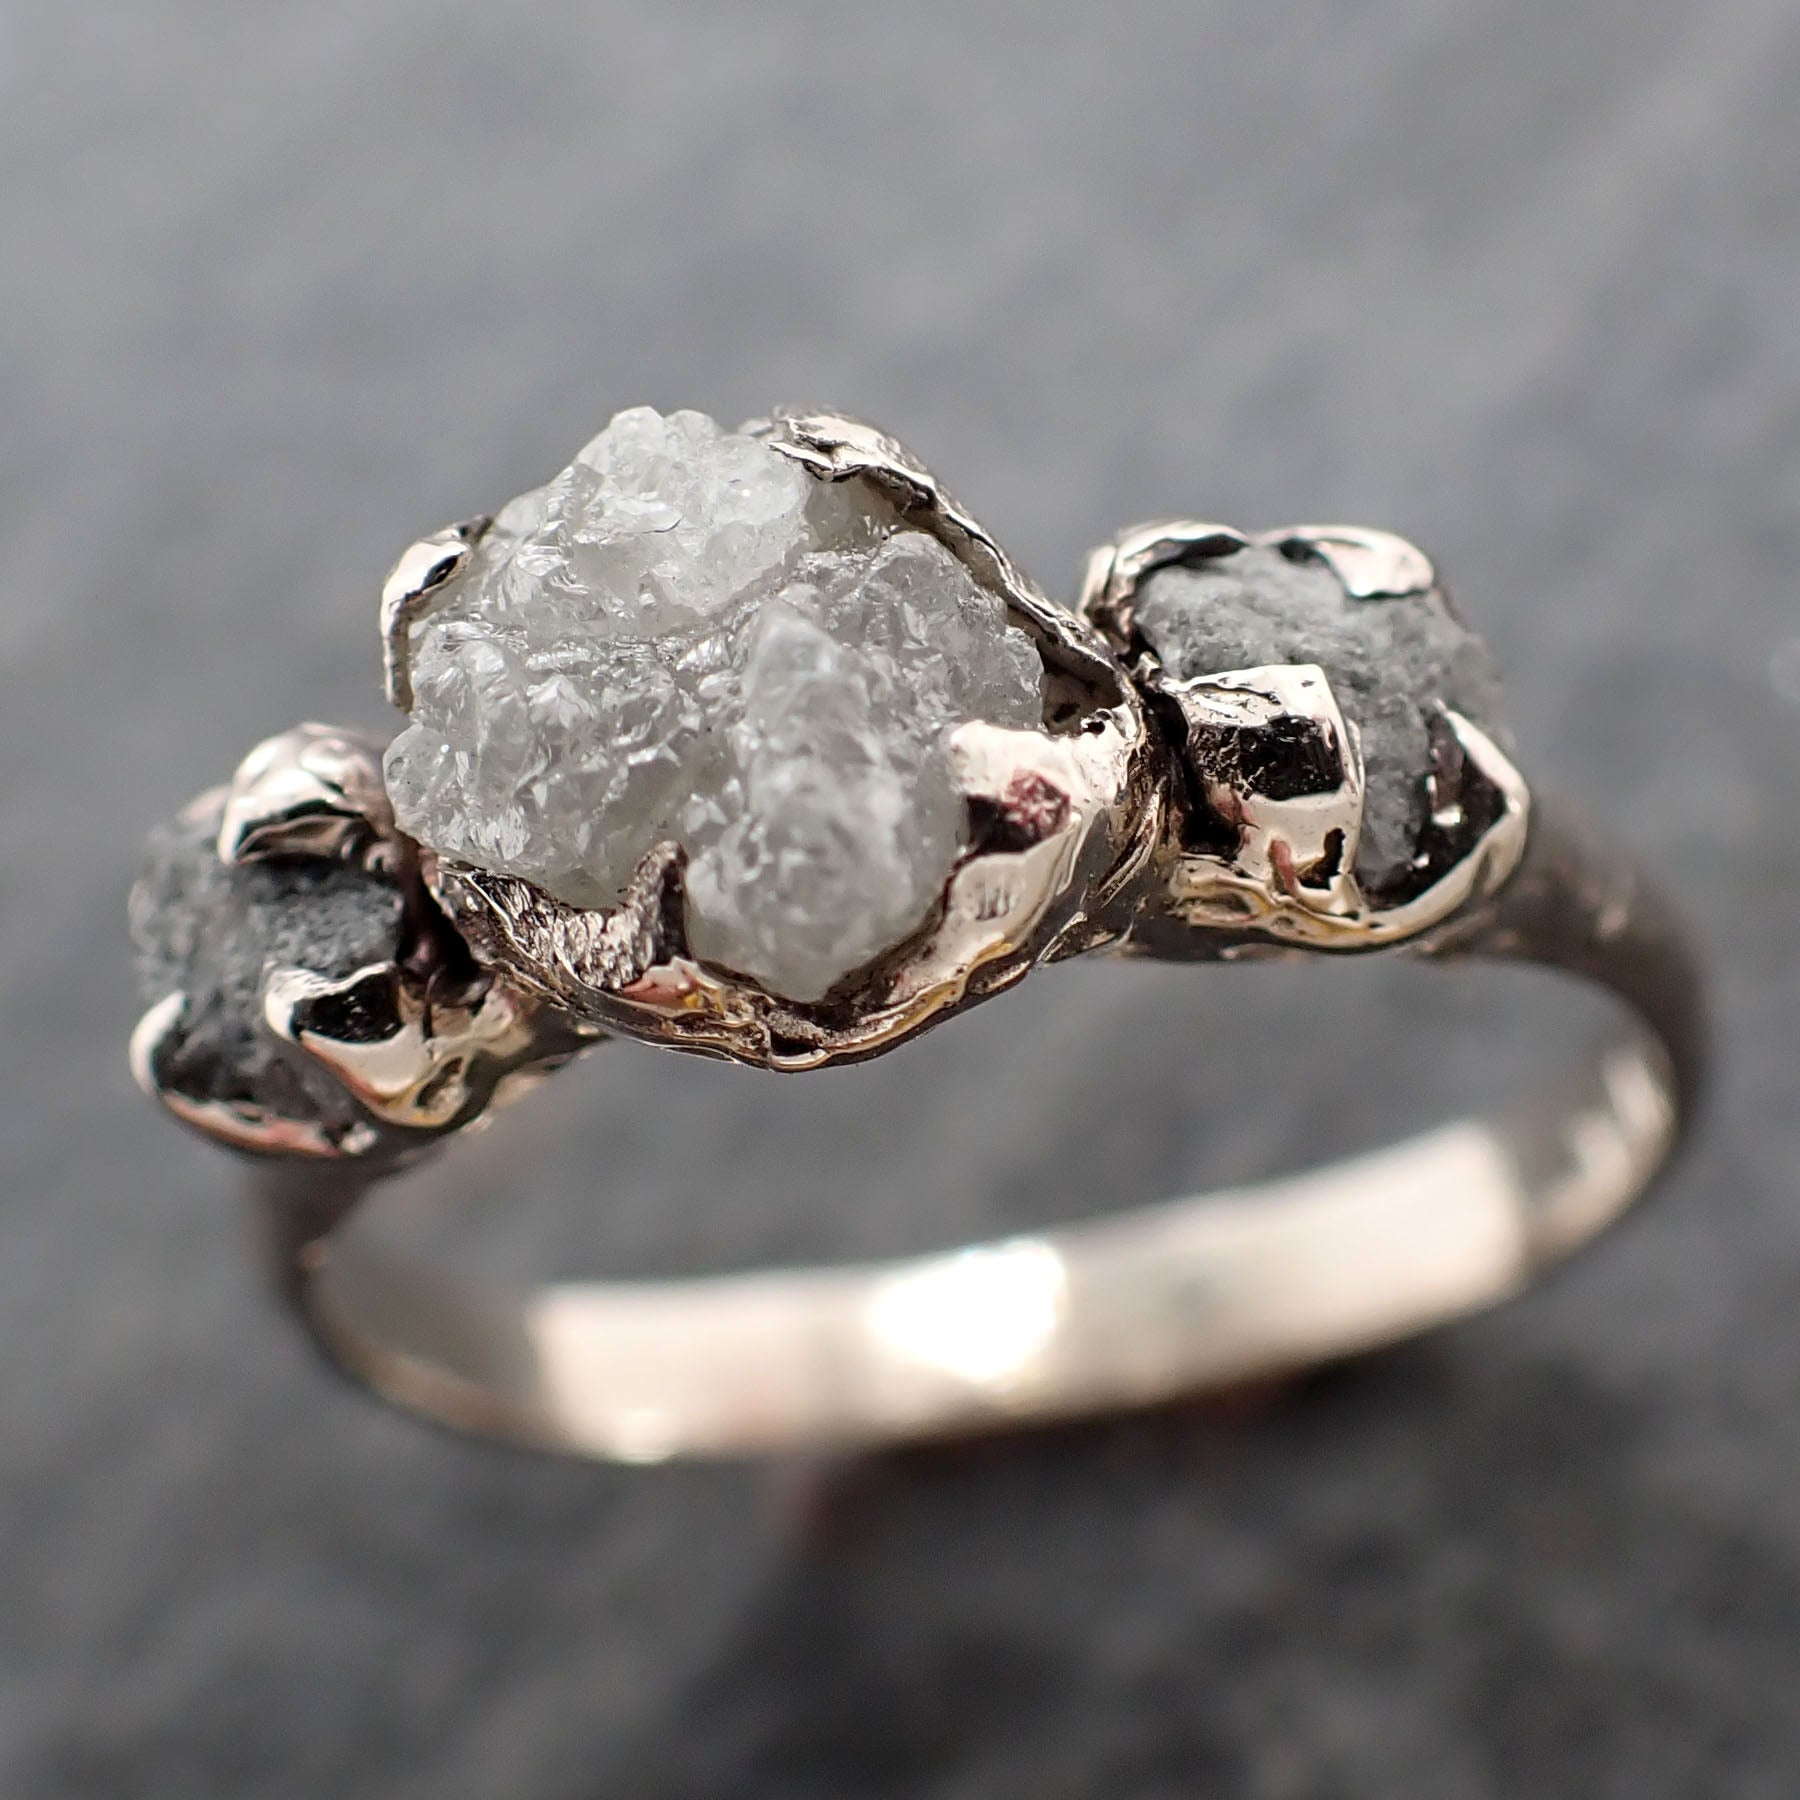 Raw Rough Diamond Engagement Stacking ring Multi stone Wedding anniversary White Gold 14k Rustic byAngeline 2563